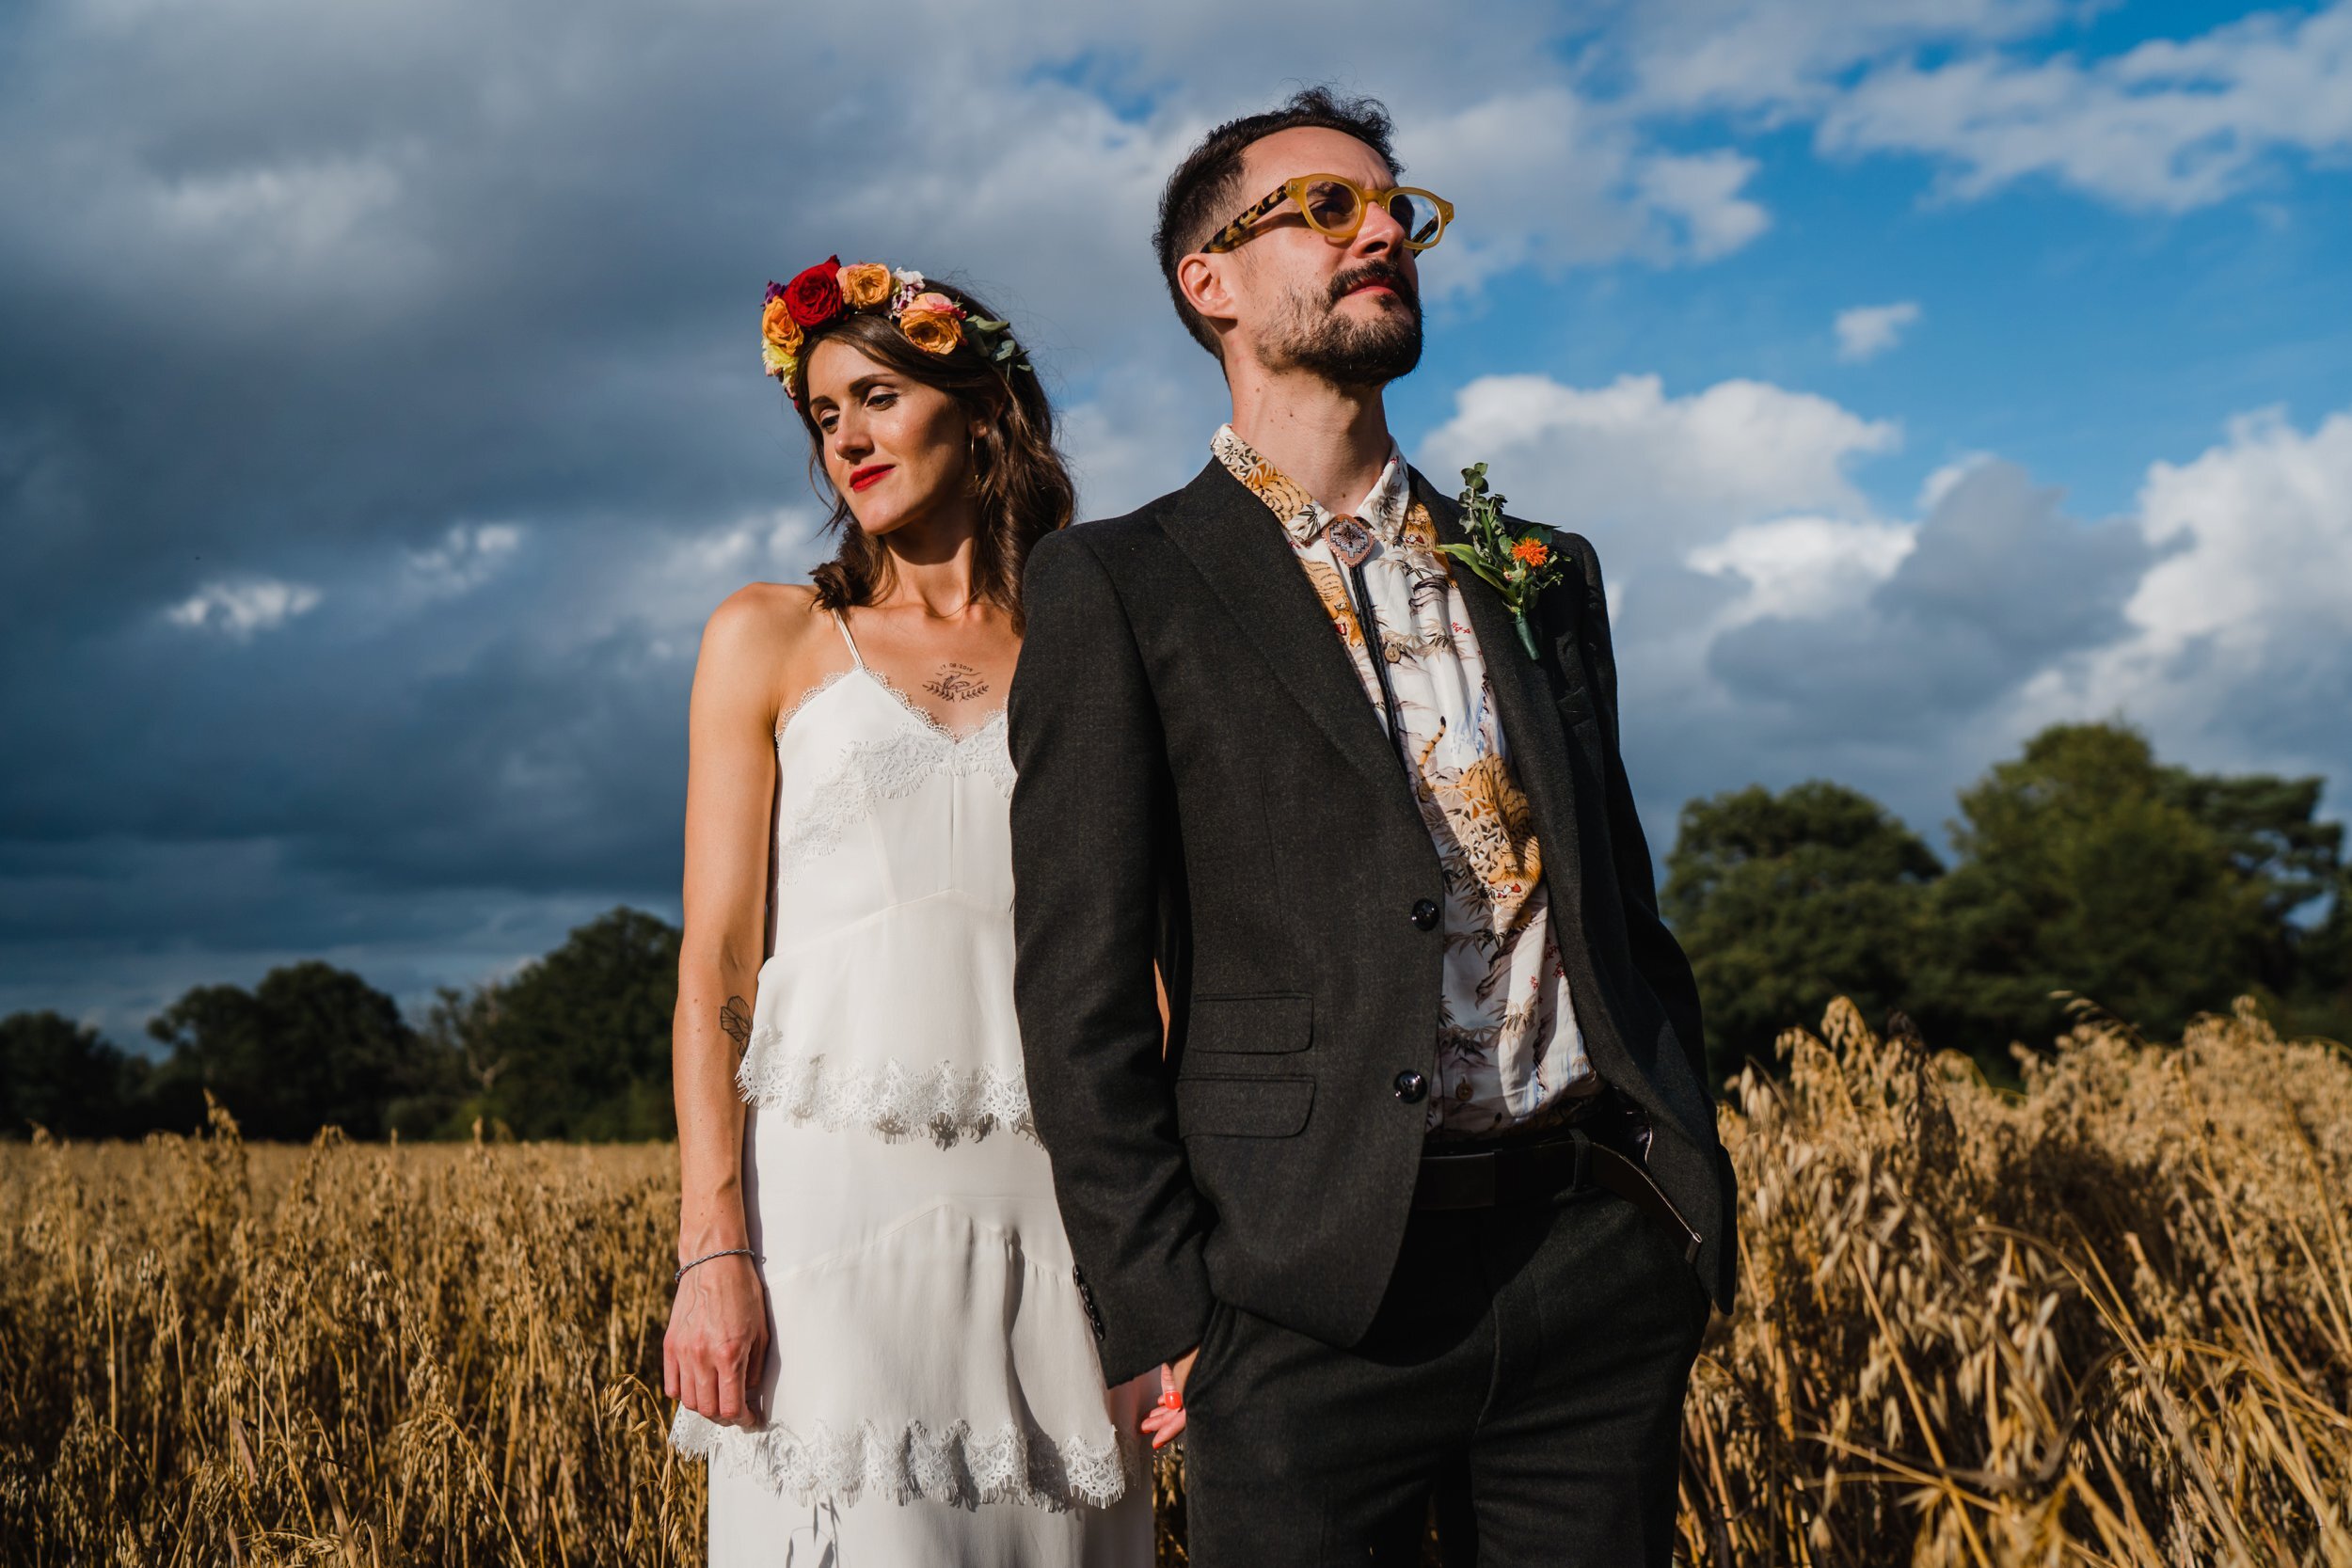 a contemporary wedding portrait in a field 